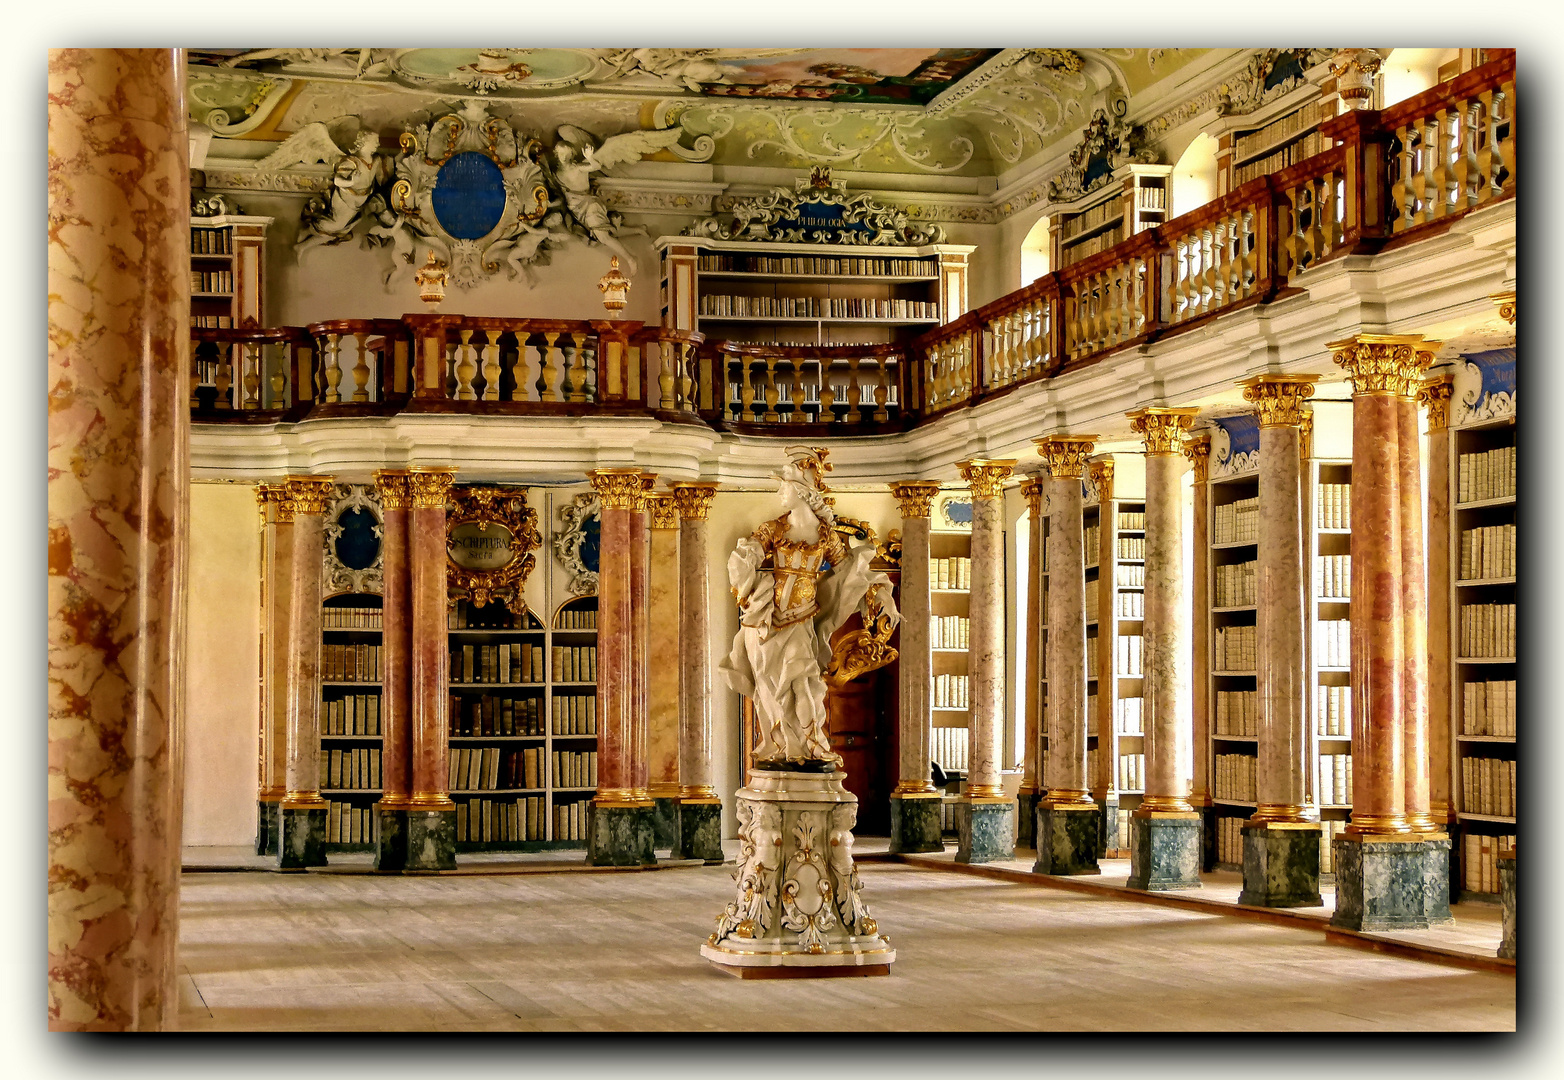 Bibliothek im Rokokostil